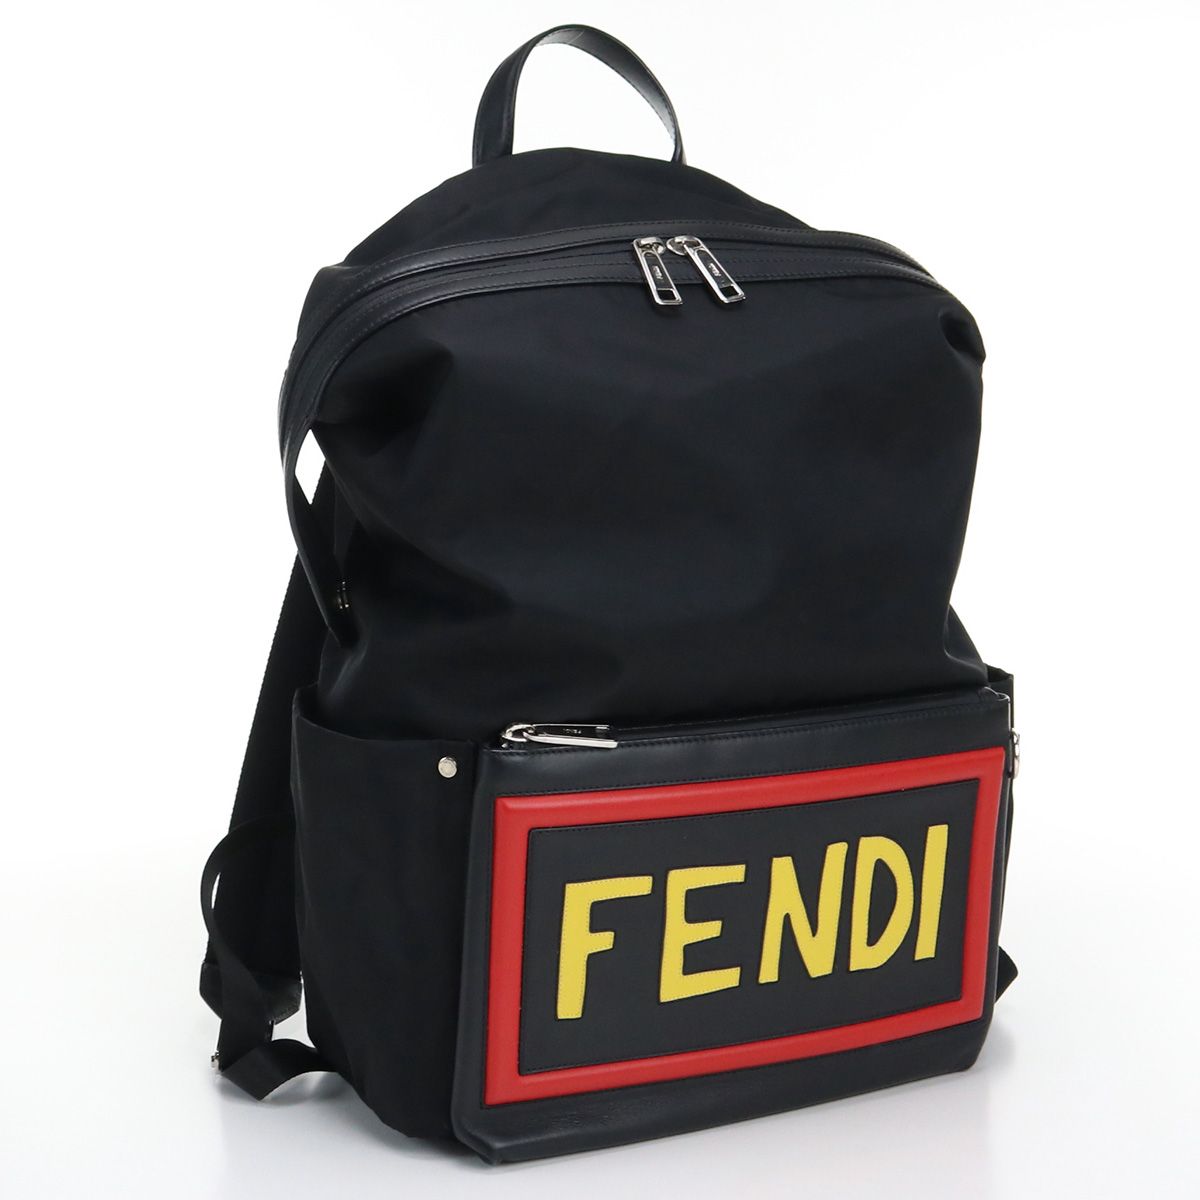 FENDI フェンディ バックパック 7VZ035 リュック ナイロン メンズ